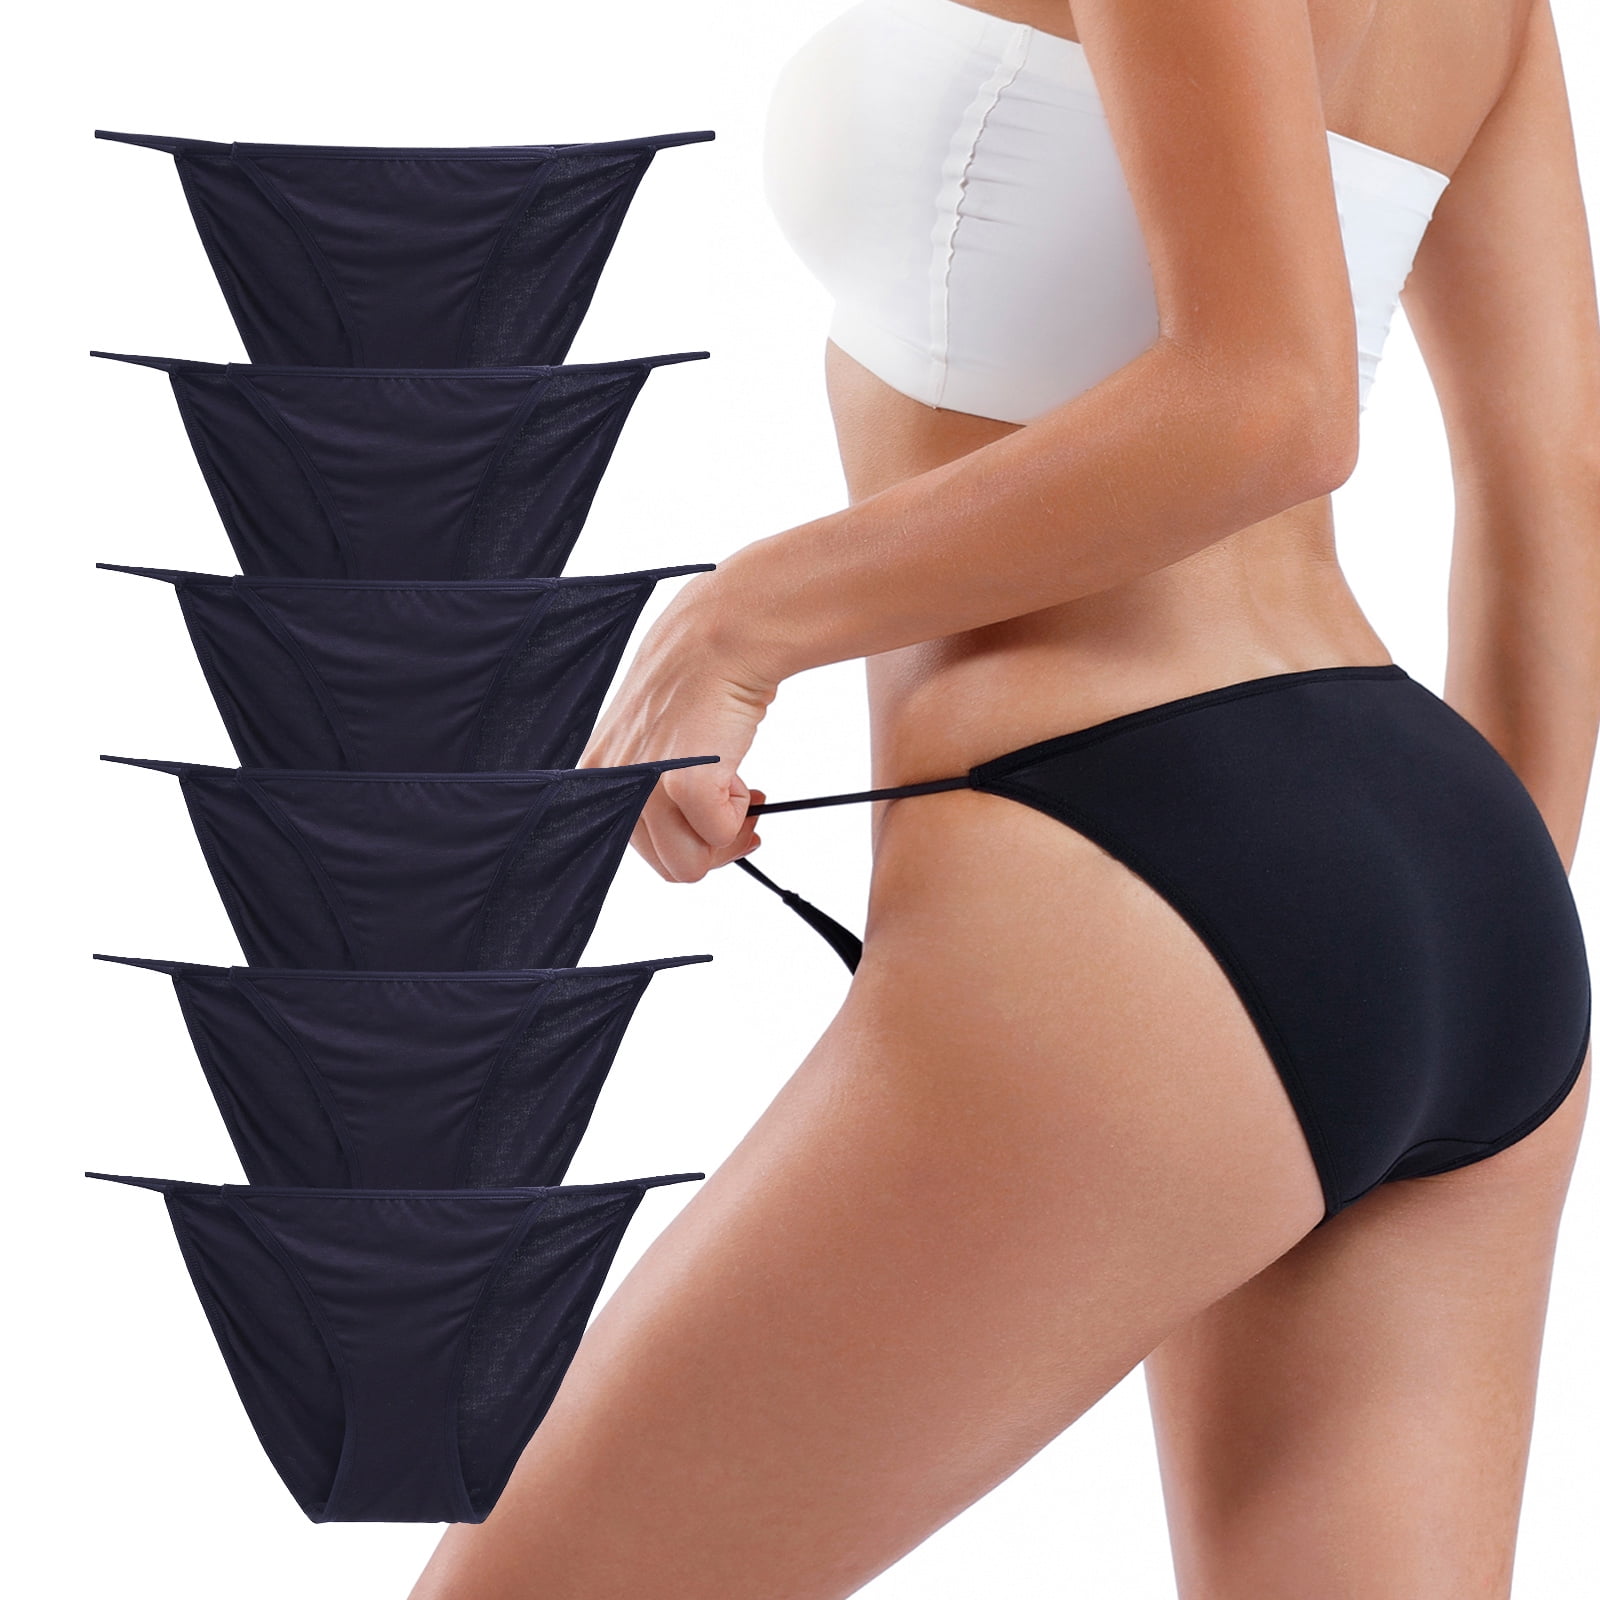 Buankoxy 6 Pack Women's Low-Rise String Bikini Panty Stretch  Briefs(Black,Size6)